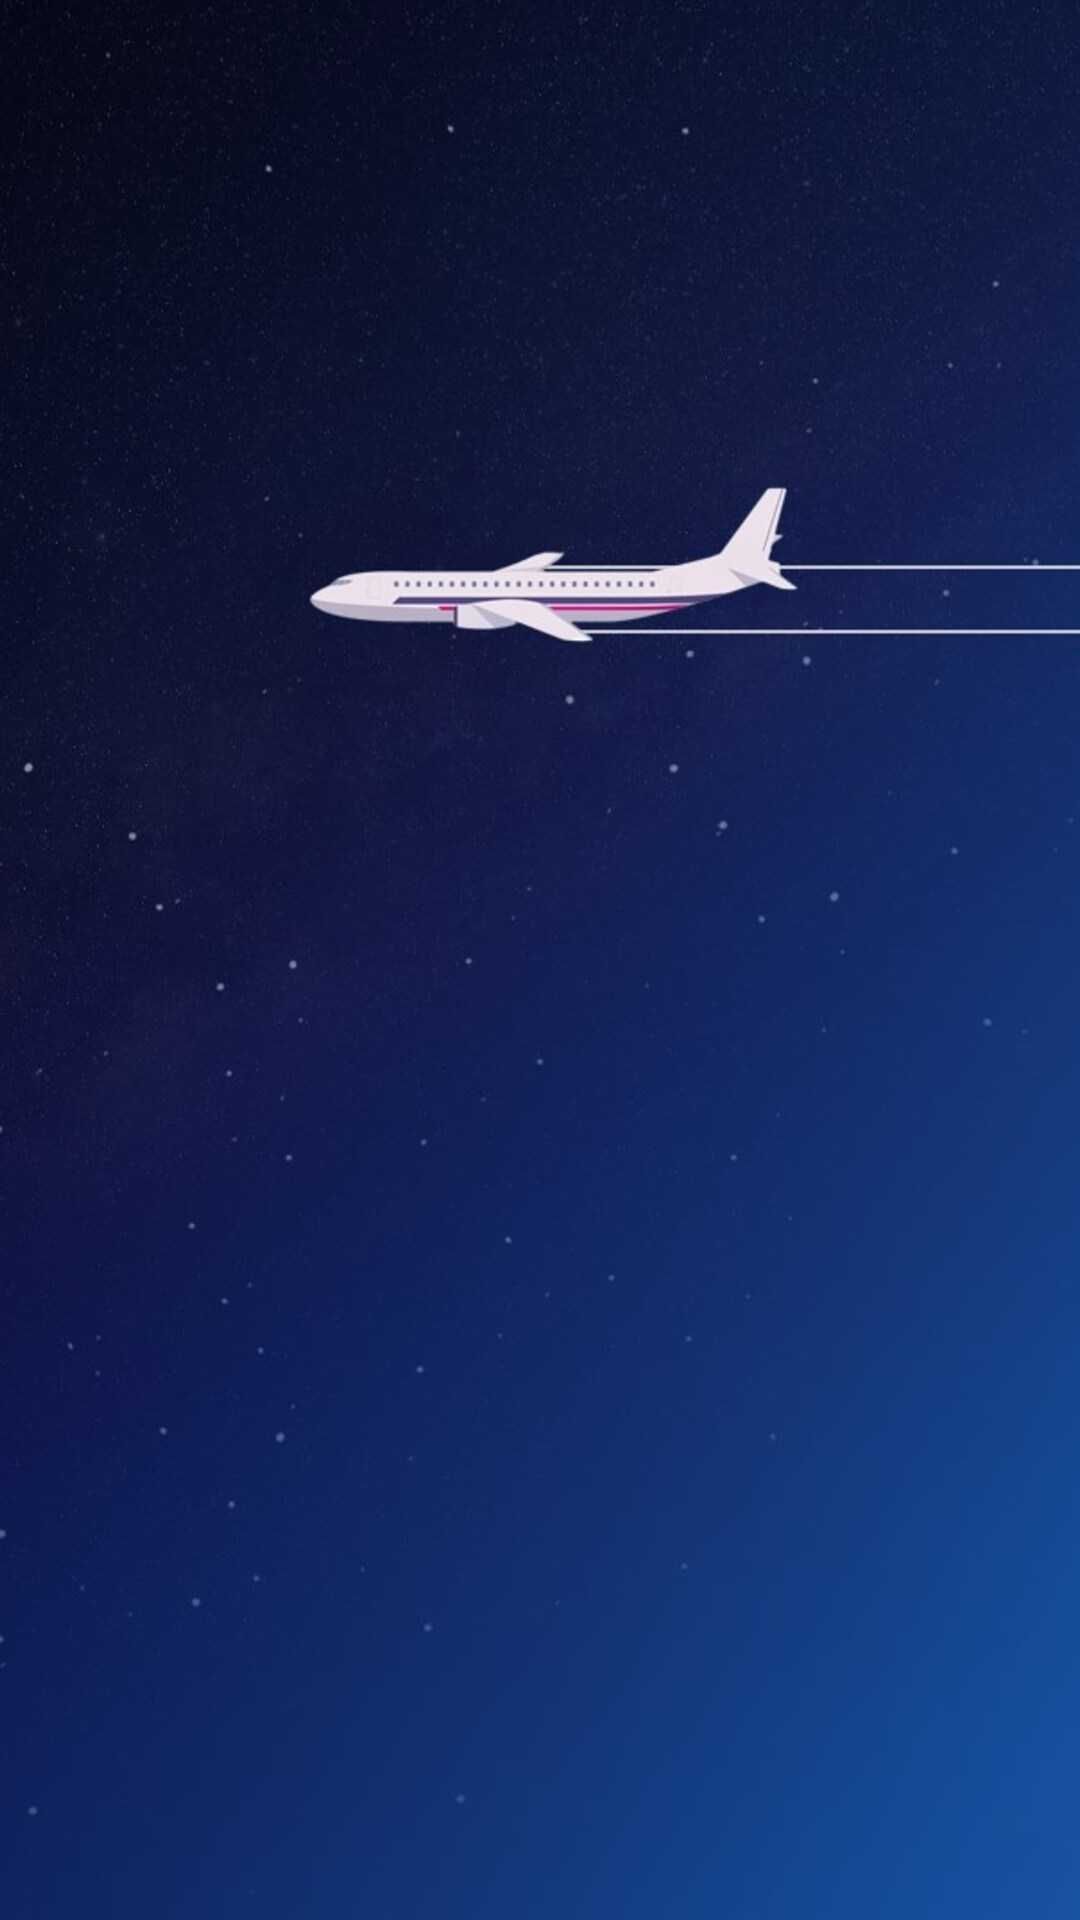  Boeing Hintergrundbild 1080x1920. Boeing 747 Wallpaper. Free iphone wallpaper, Airplane wallpaper, Cool background for iphone